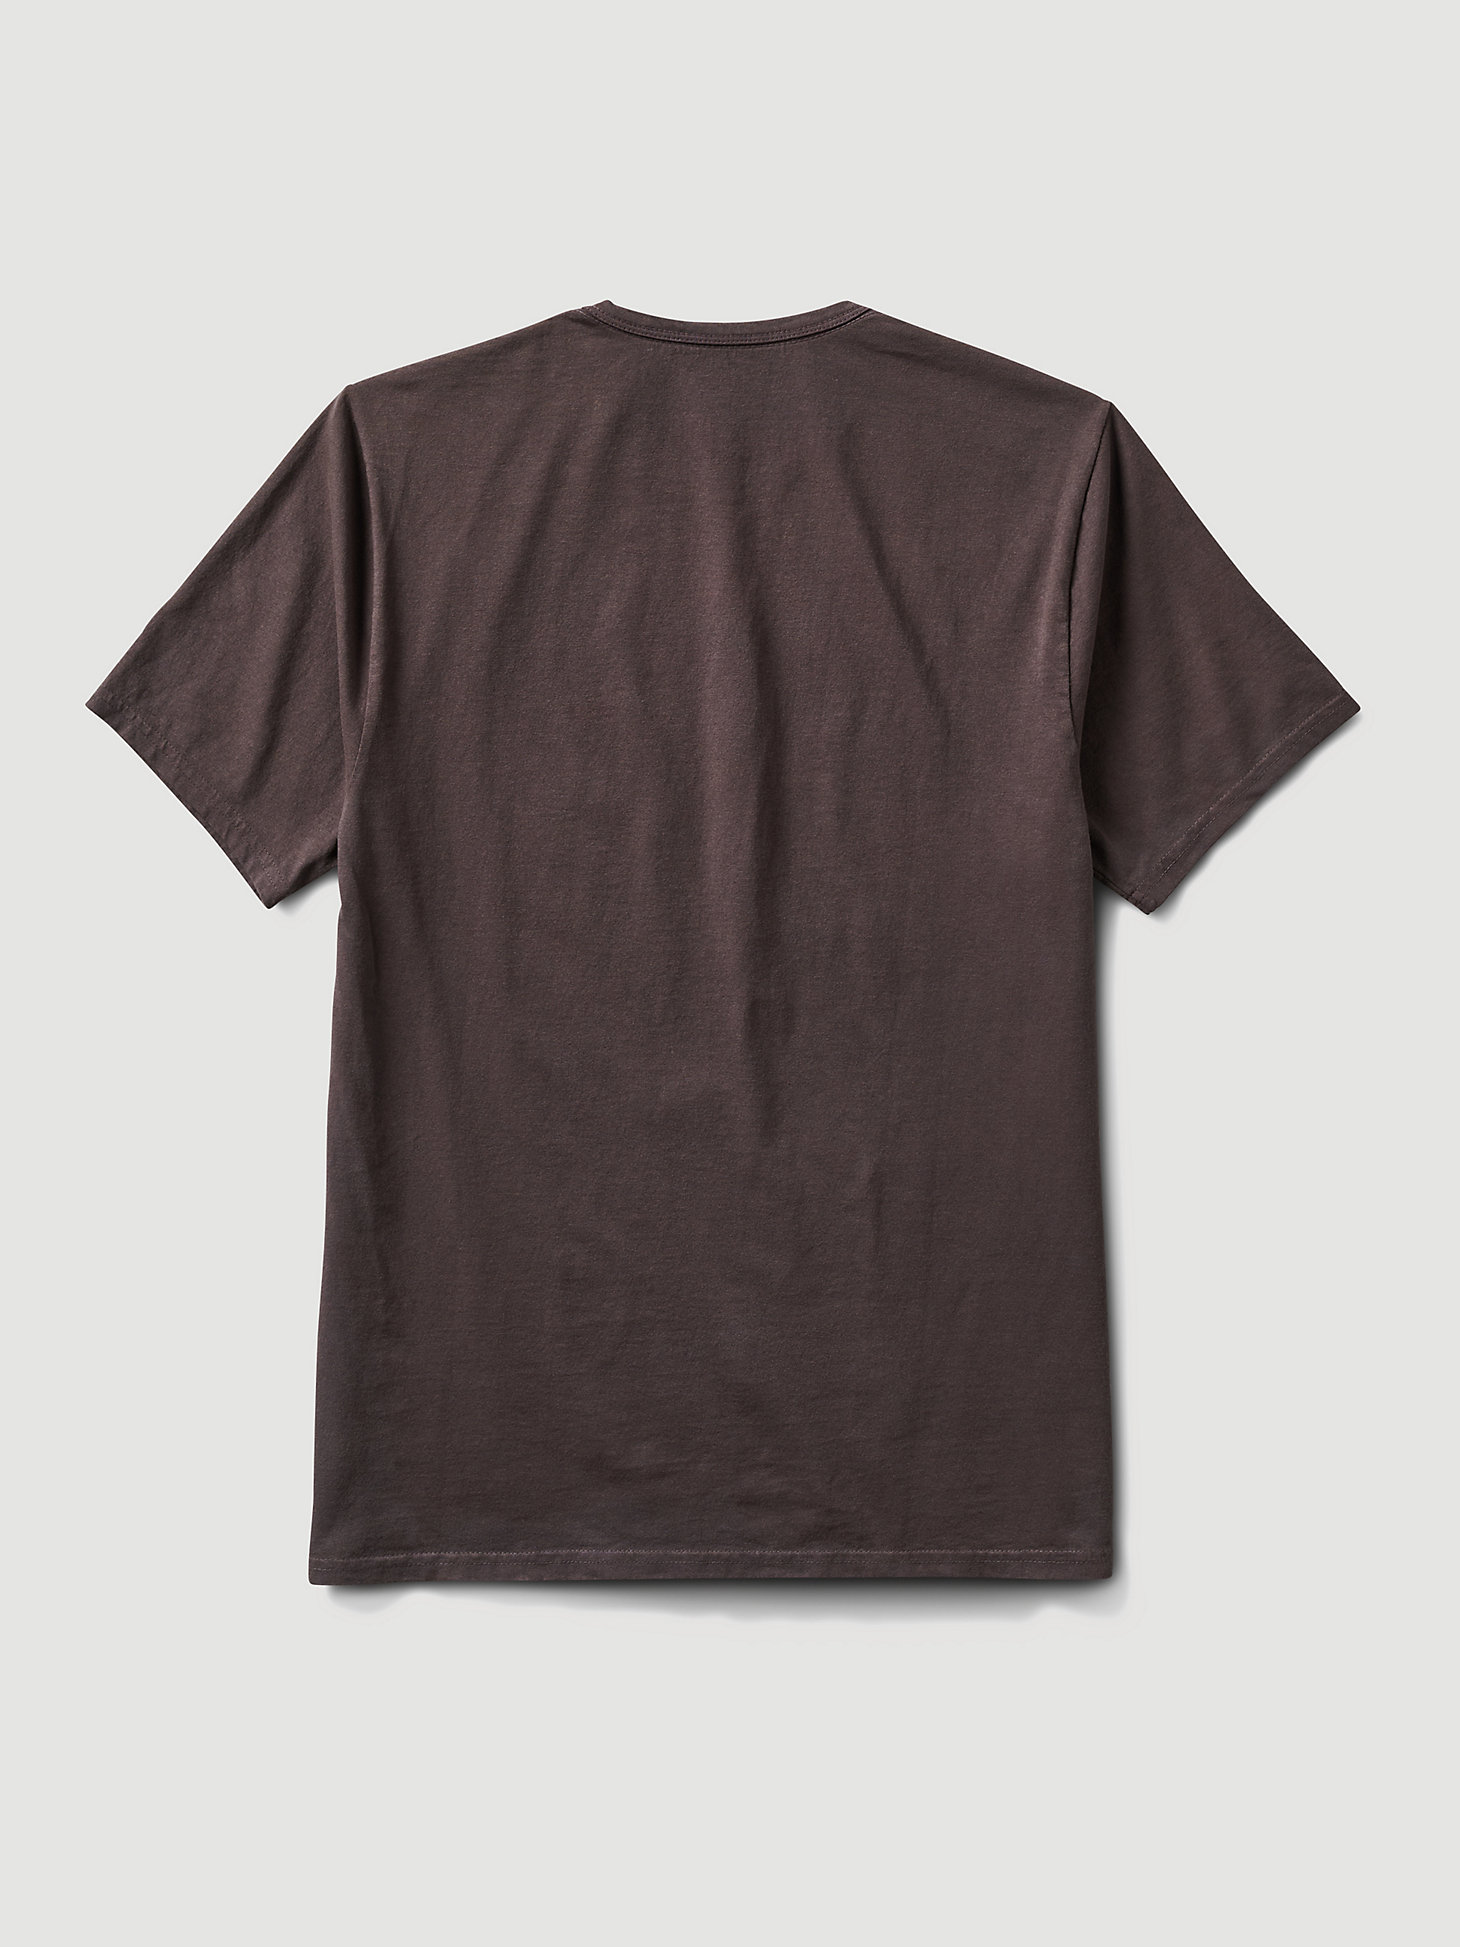 Roark x Wrangler® Ghostrider Crew T-Shirt in Charcoal alternative view 1